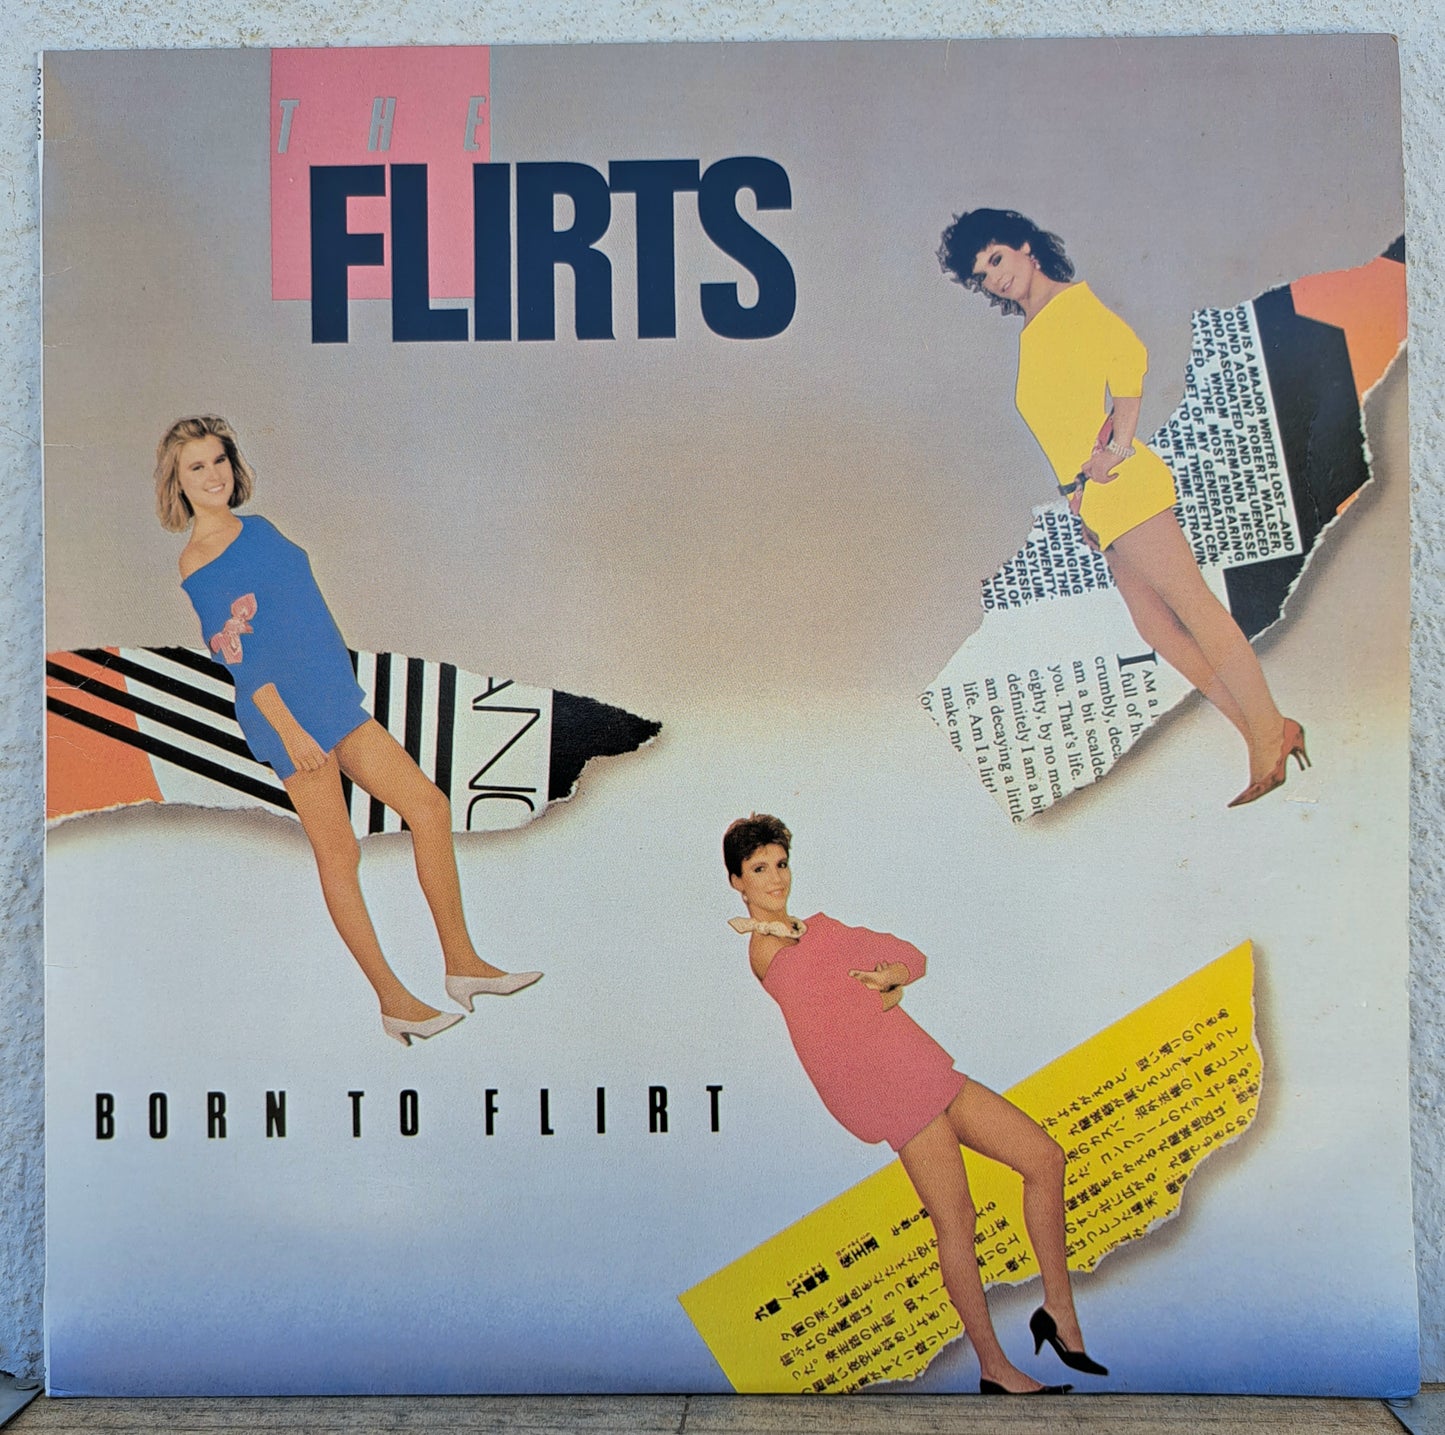 The Flirts - Born to flirt